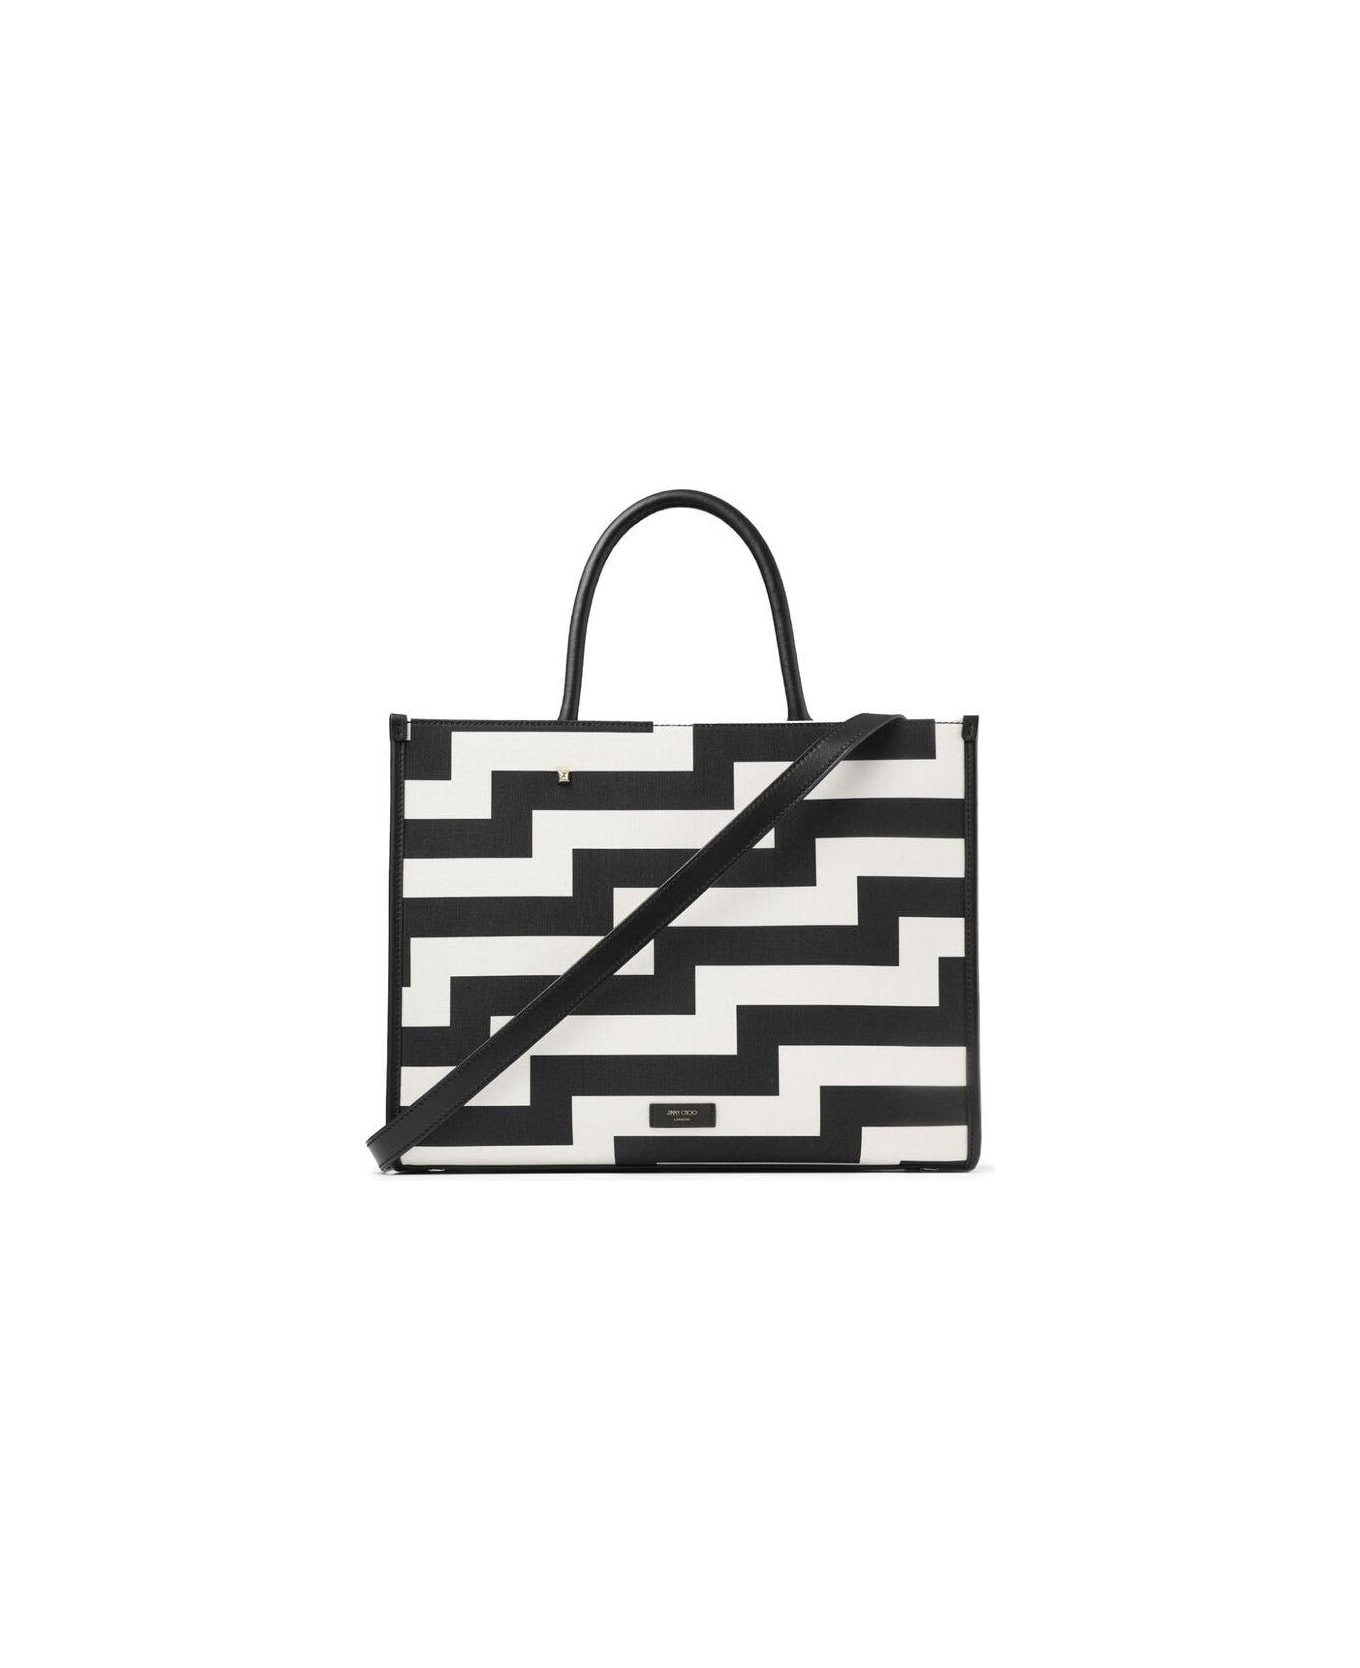 Jimmy Choo Avenue Logo Embroidered Tote Bag - WHITE/BLACK トートバッグ